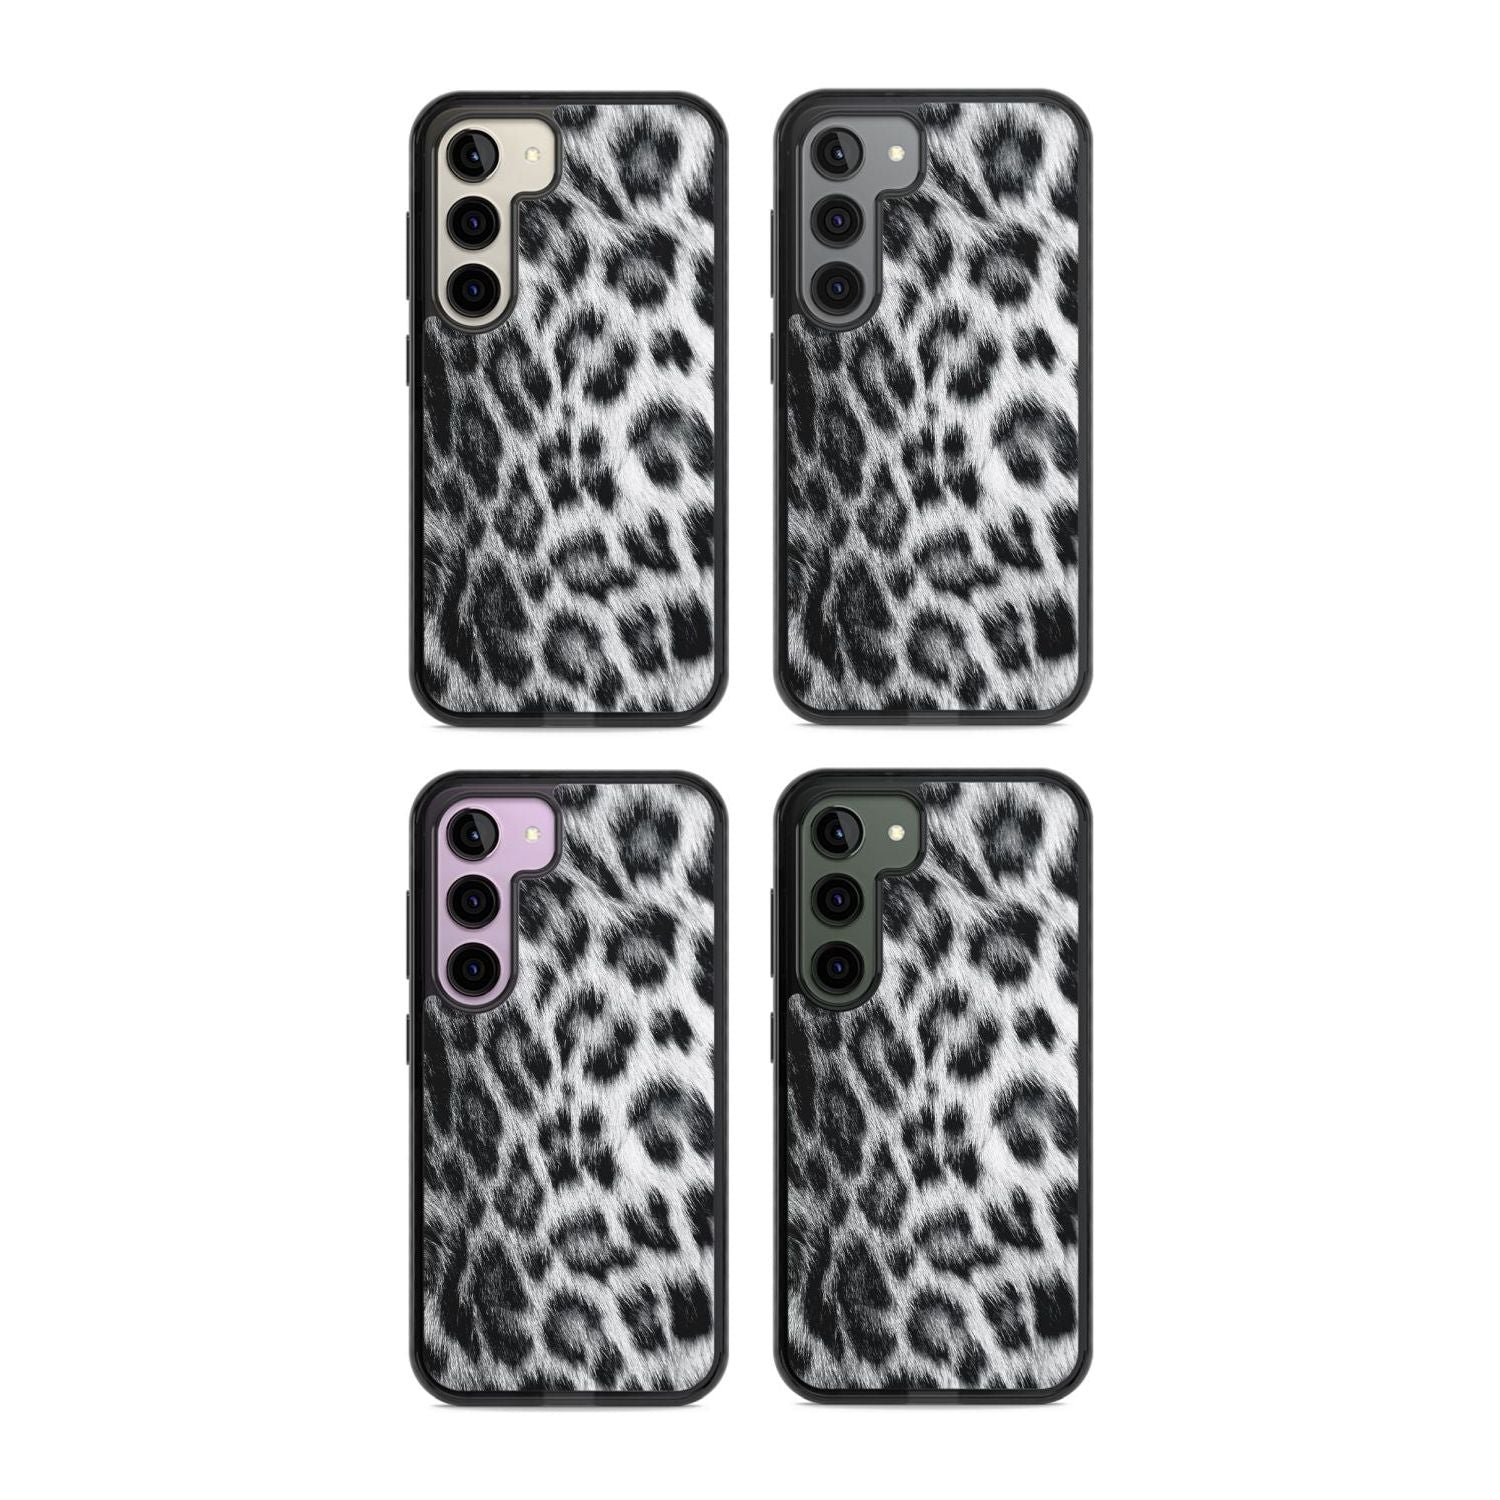 Animal Fur Pattern - Snow Leopard